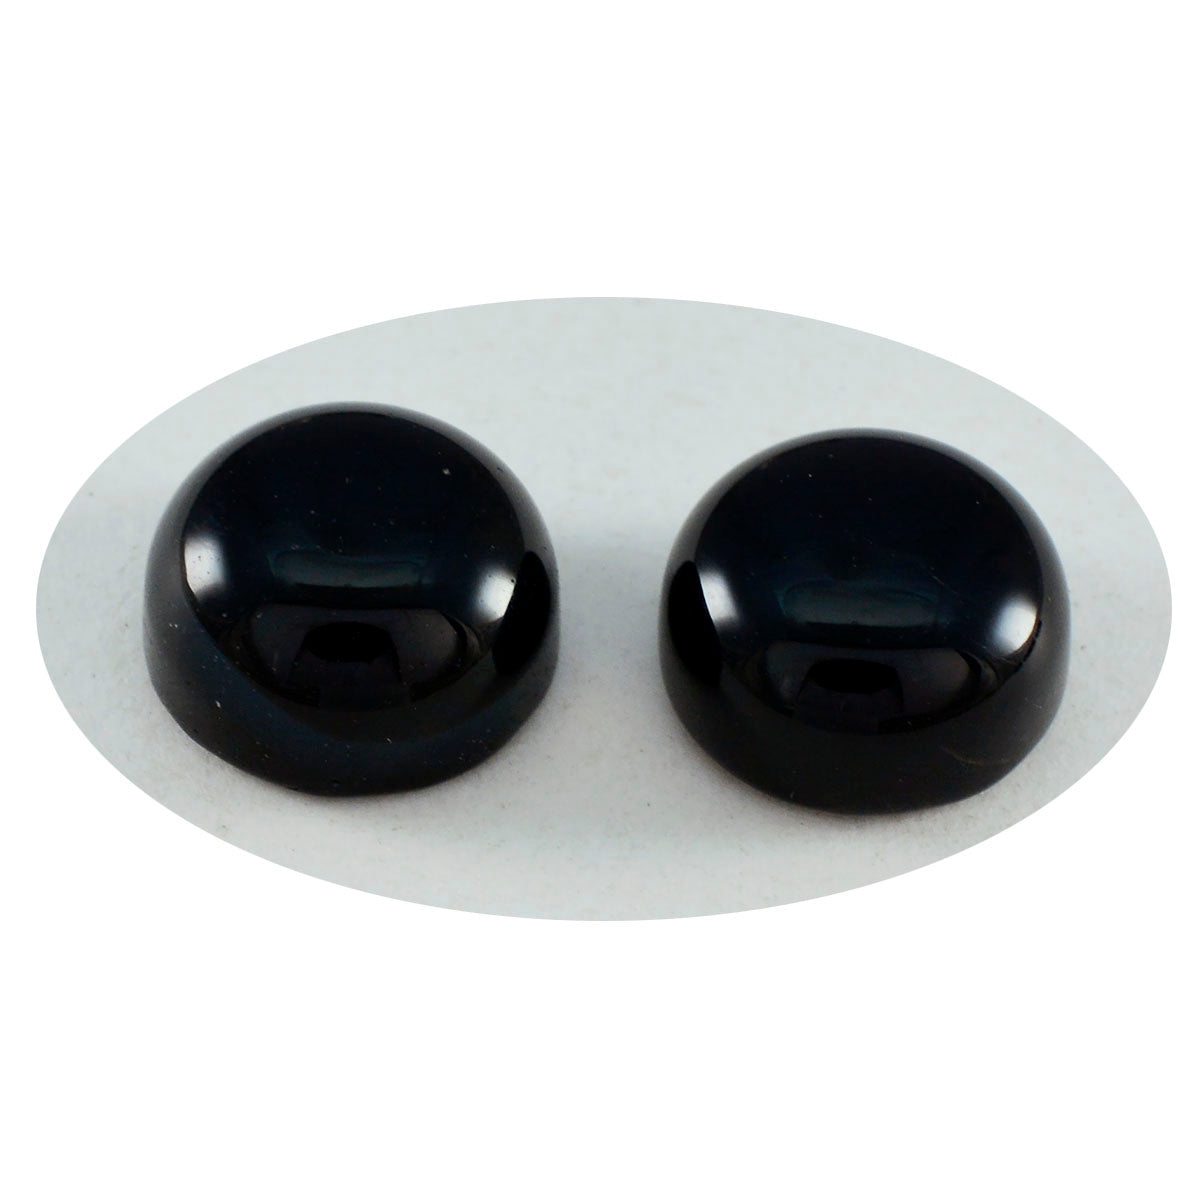 riyogems 1st svart onyx cabochon 12x12 mm rund form stilig kvalitet lösa ädelstenar